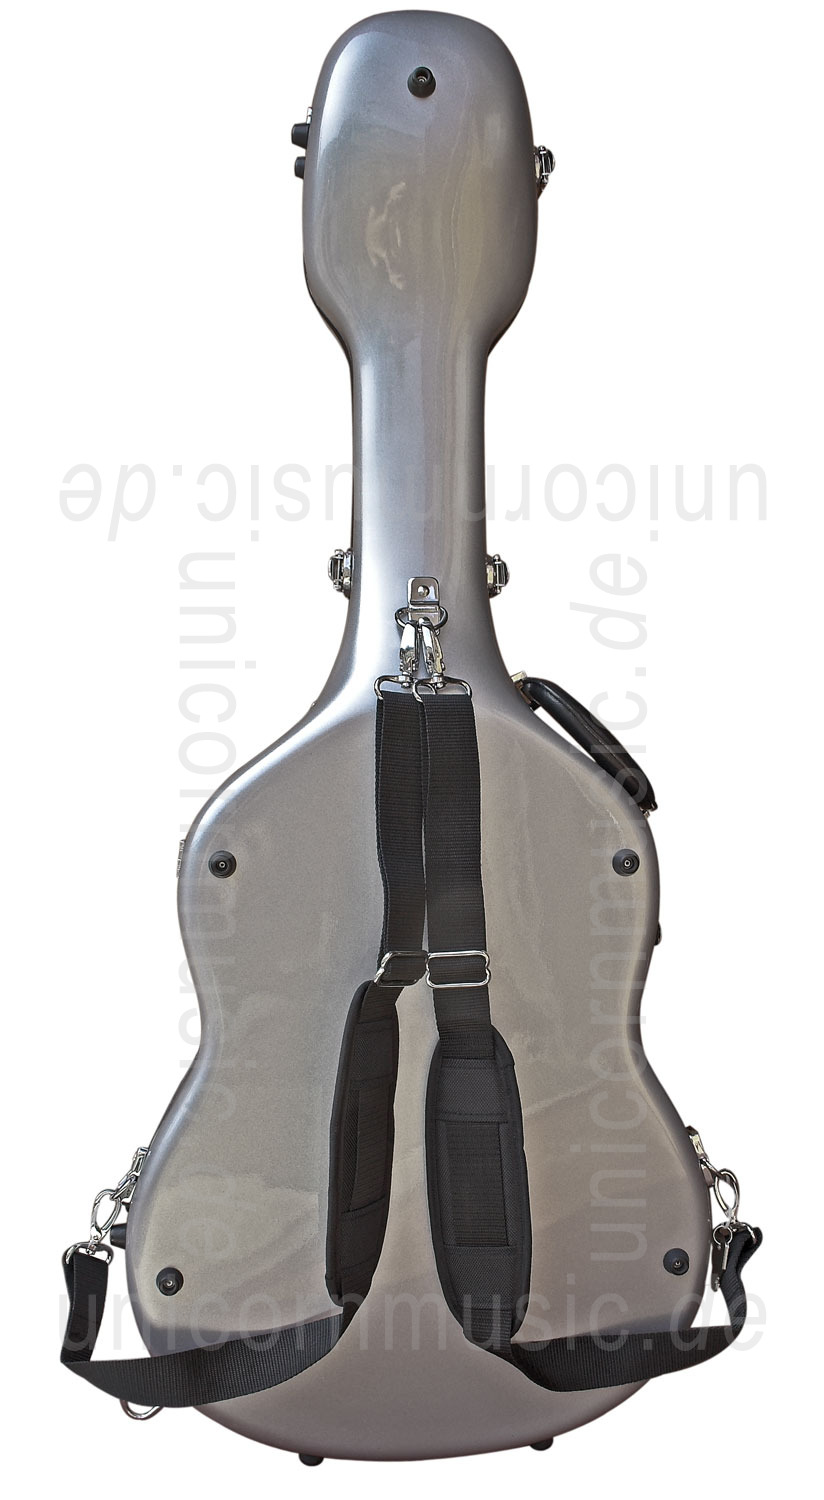 to article description / price Fibreglass Case for classical guitars - EASTMAN CAGT14 - Factory Seconds